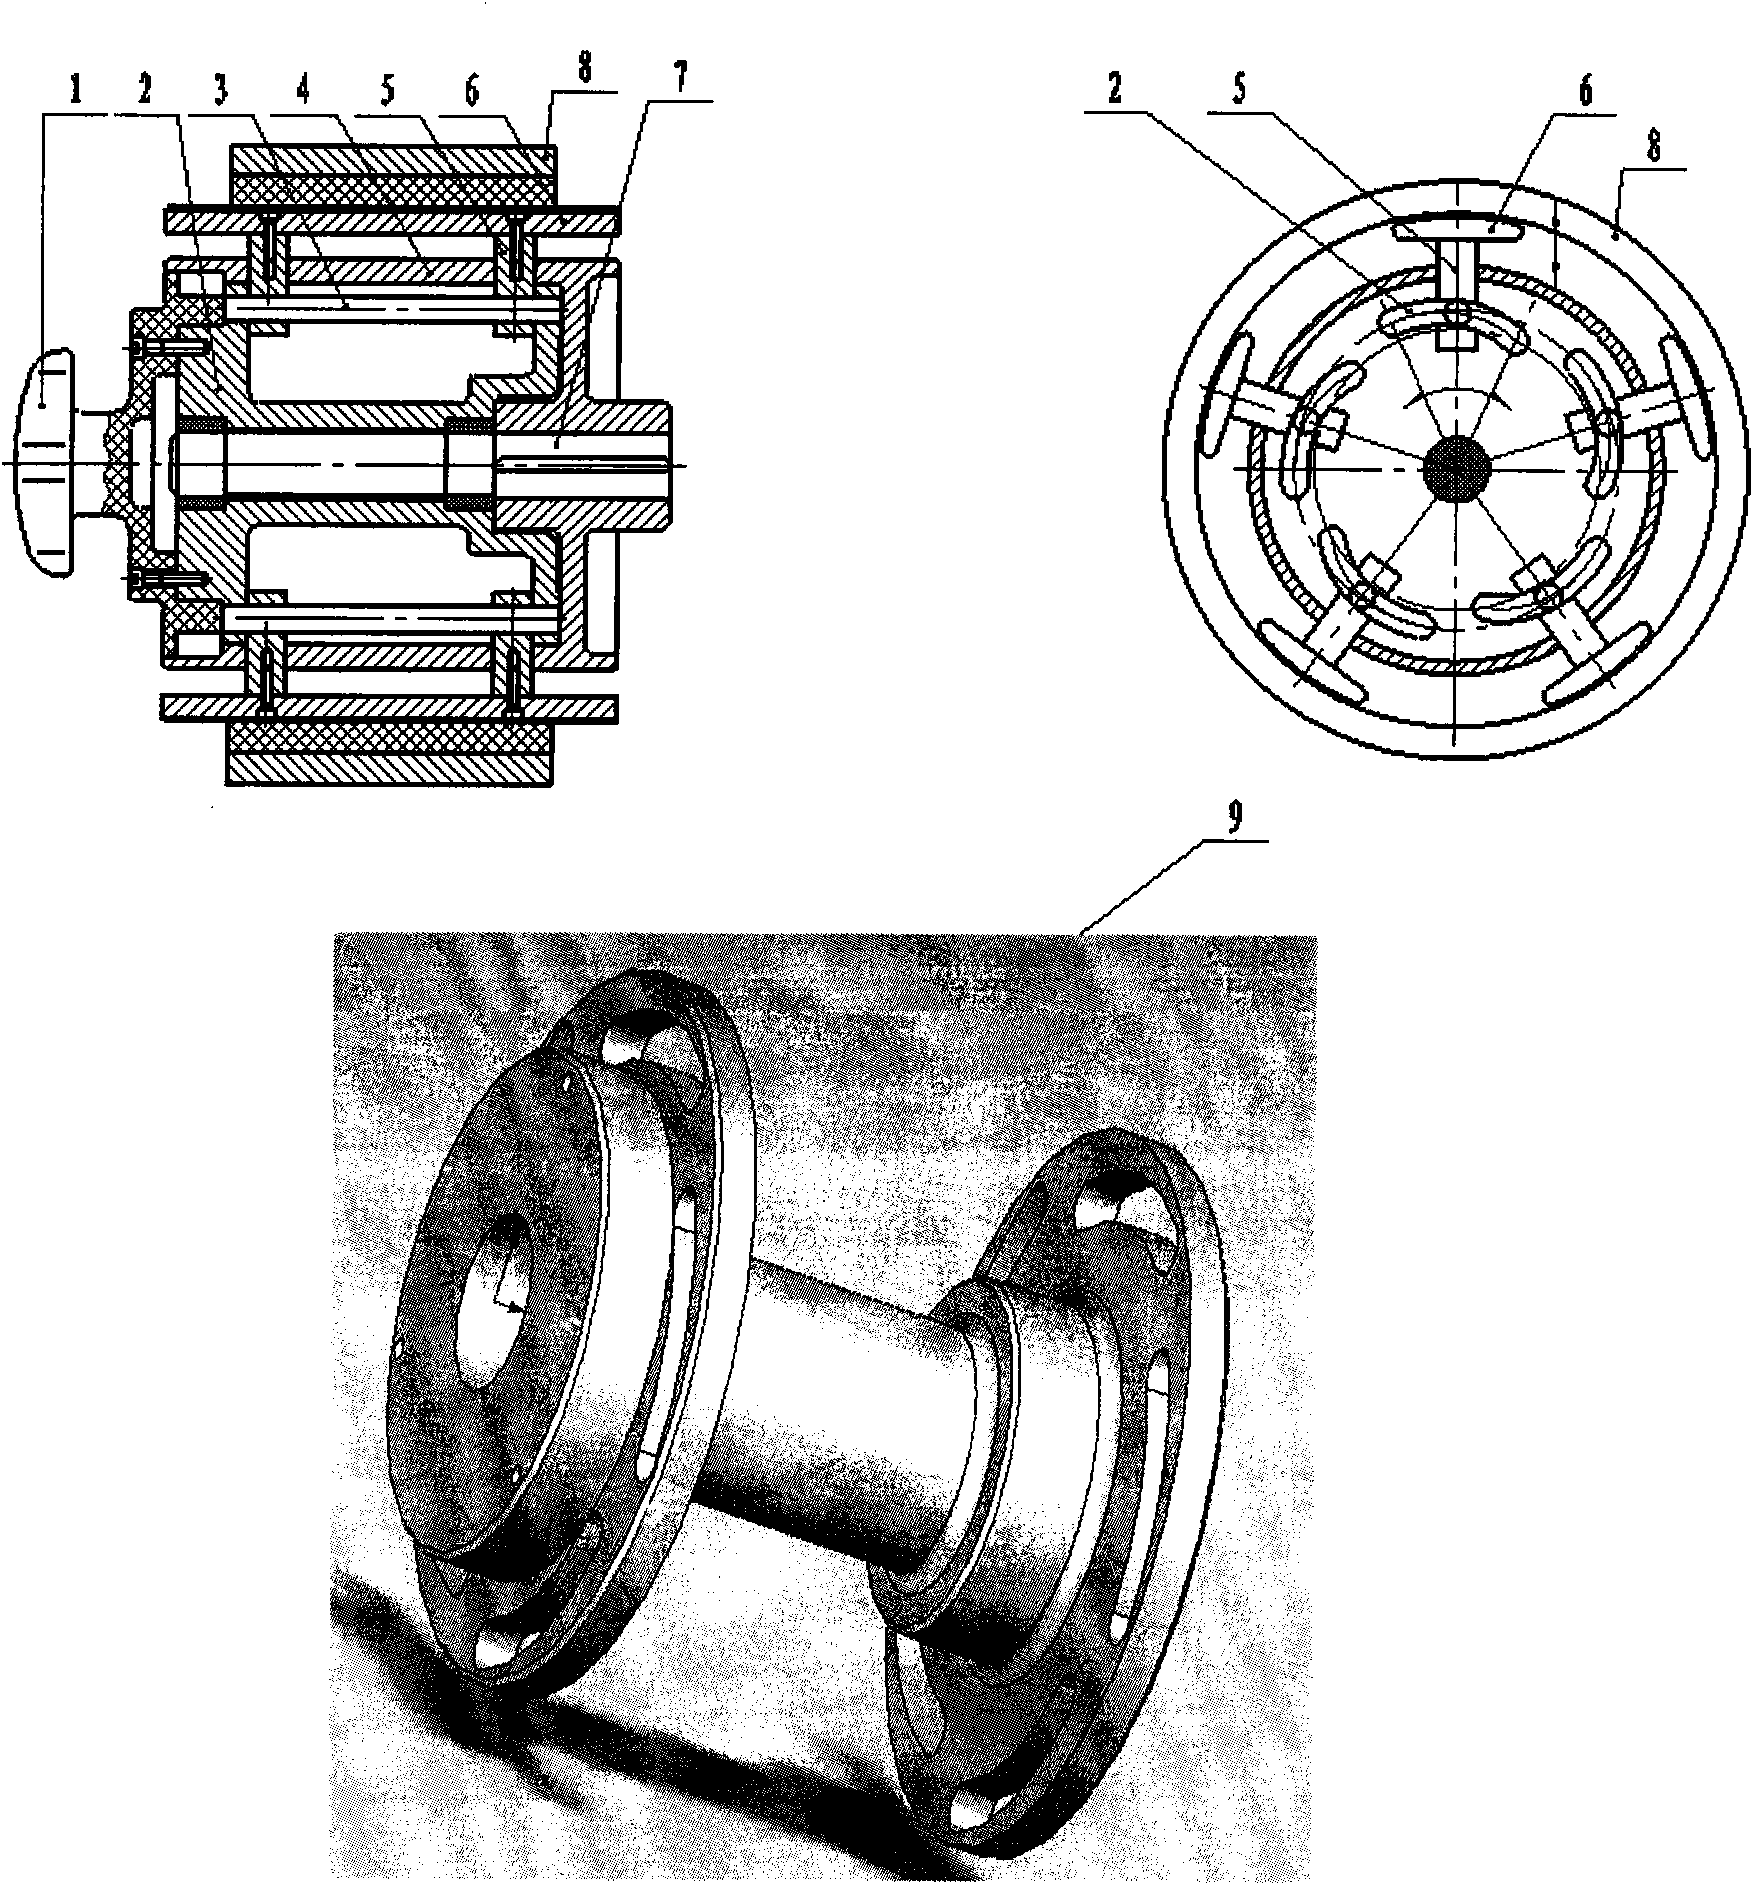 Achimedean spiral disk type variable-diameter shaft